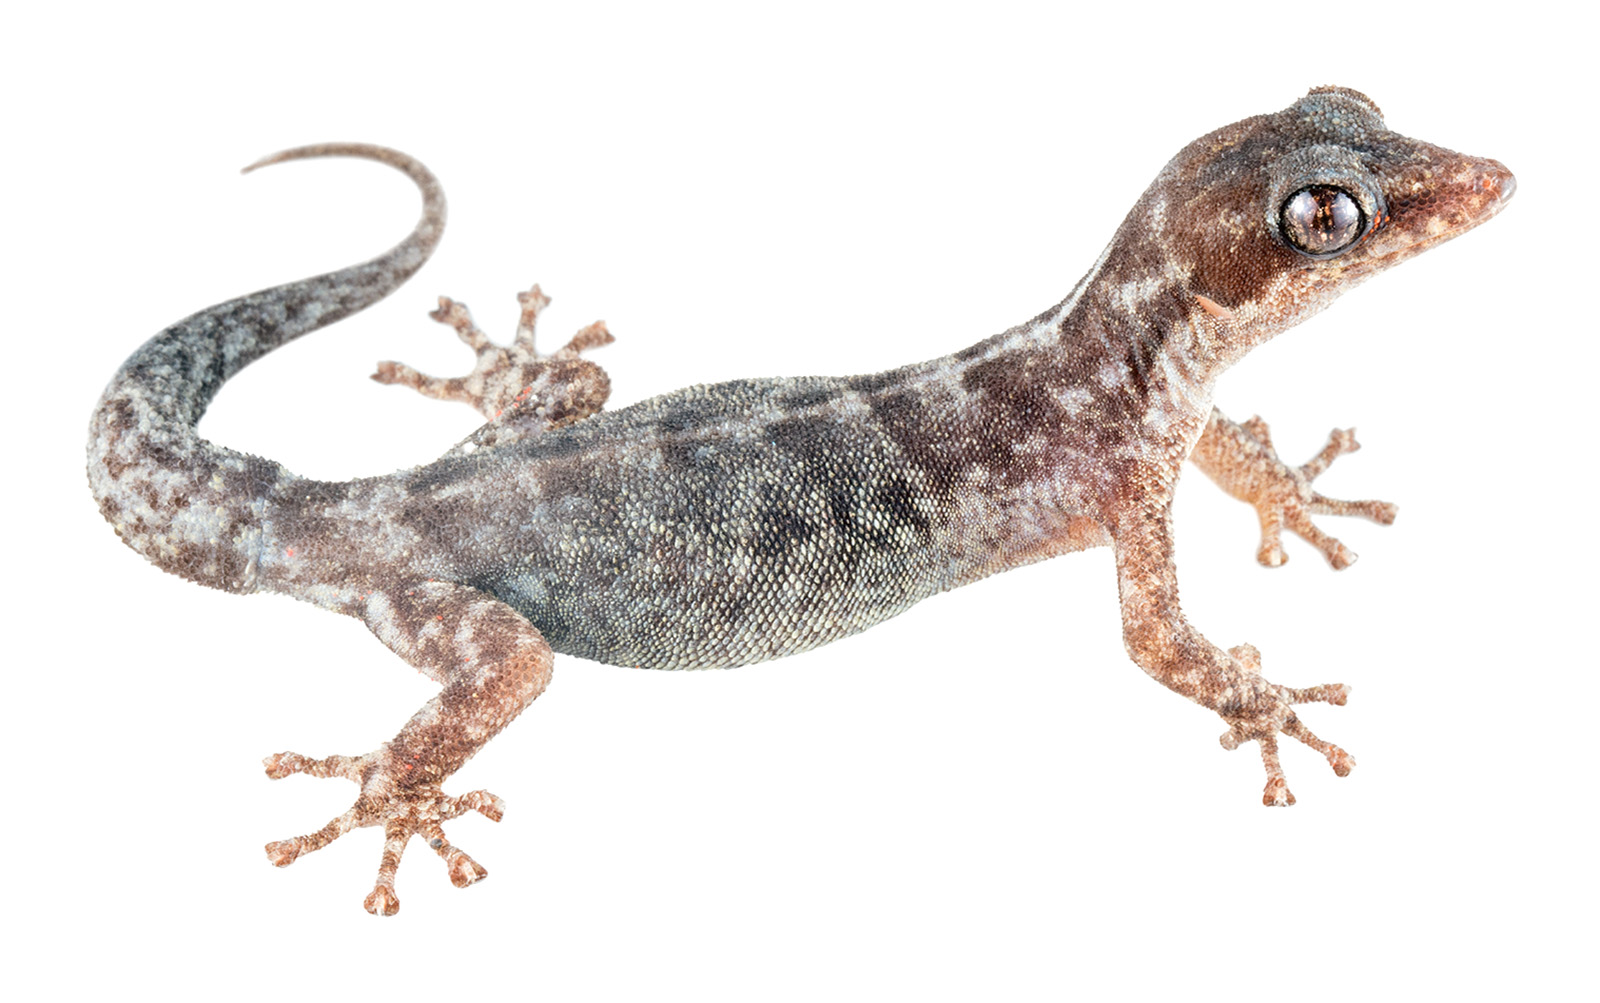 Adult female Phyllodactylus gilberti